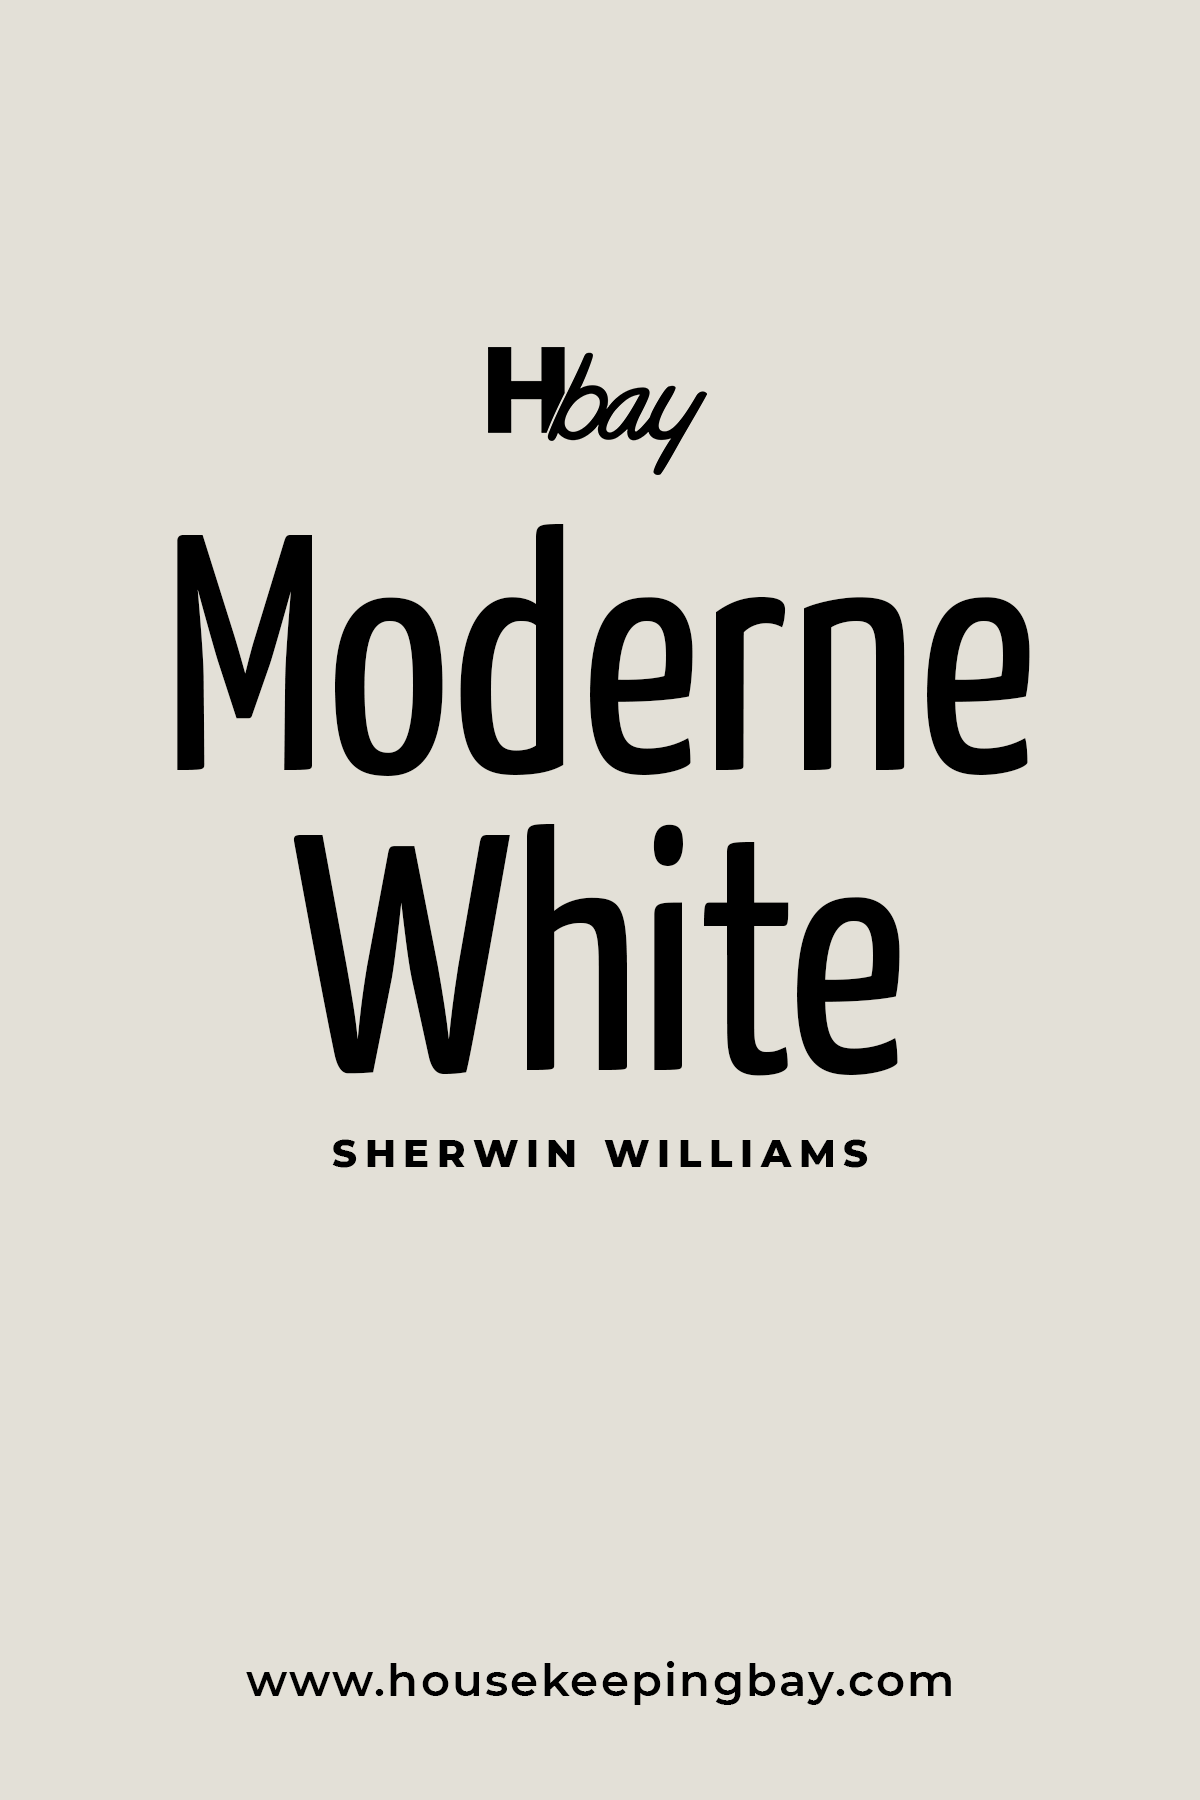 Modern White by Sherwin Williams